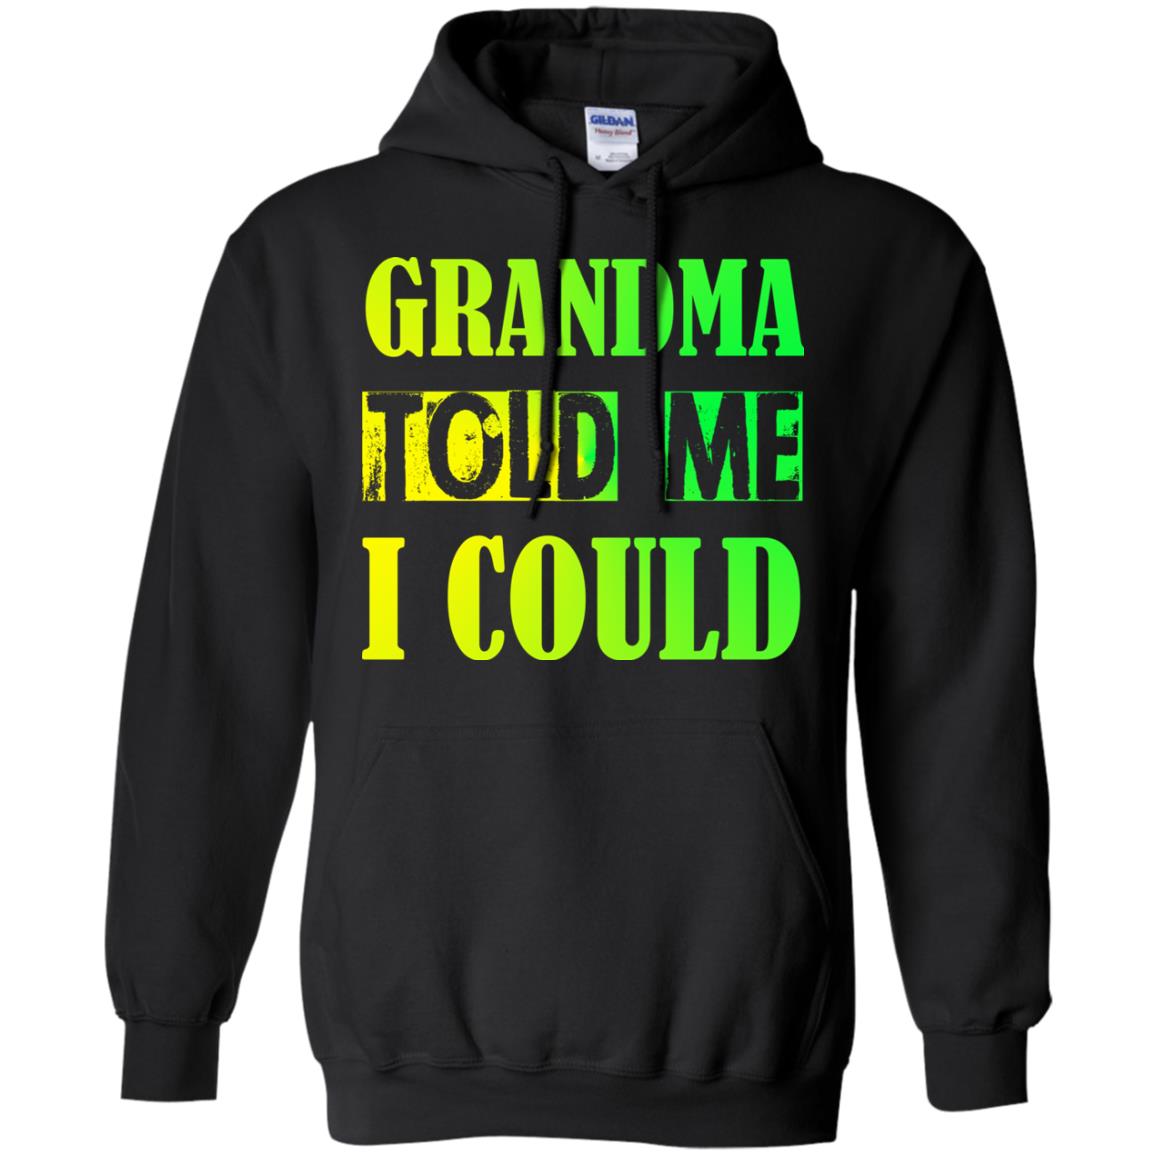 Grandma Told Me I Could Grandmom Shirt For GrandchildG185 Gildan Pullover Hoodie 8 oz.